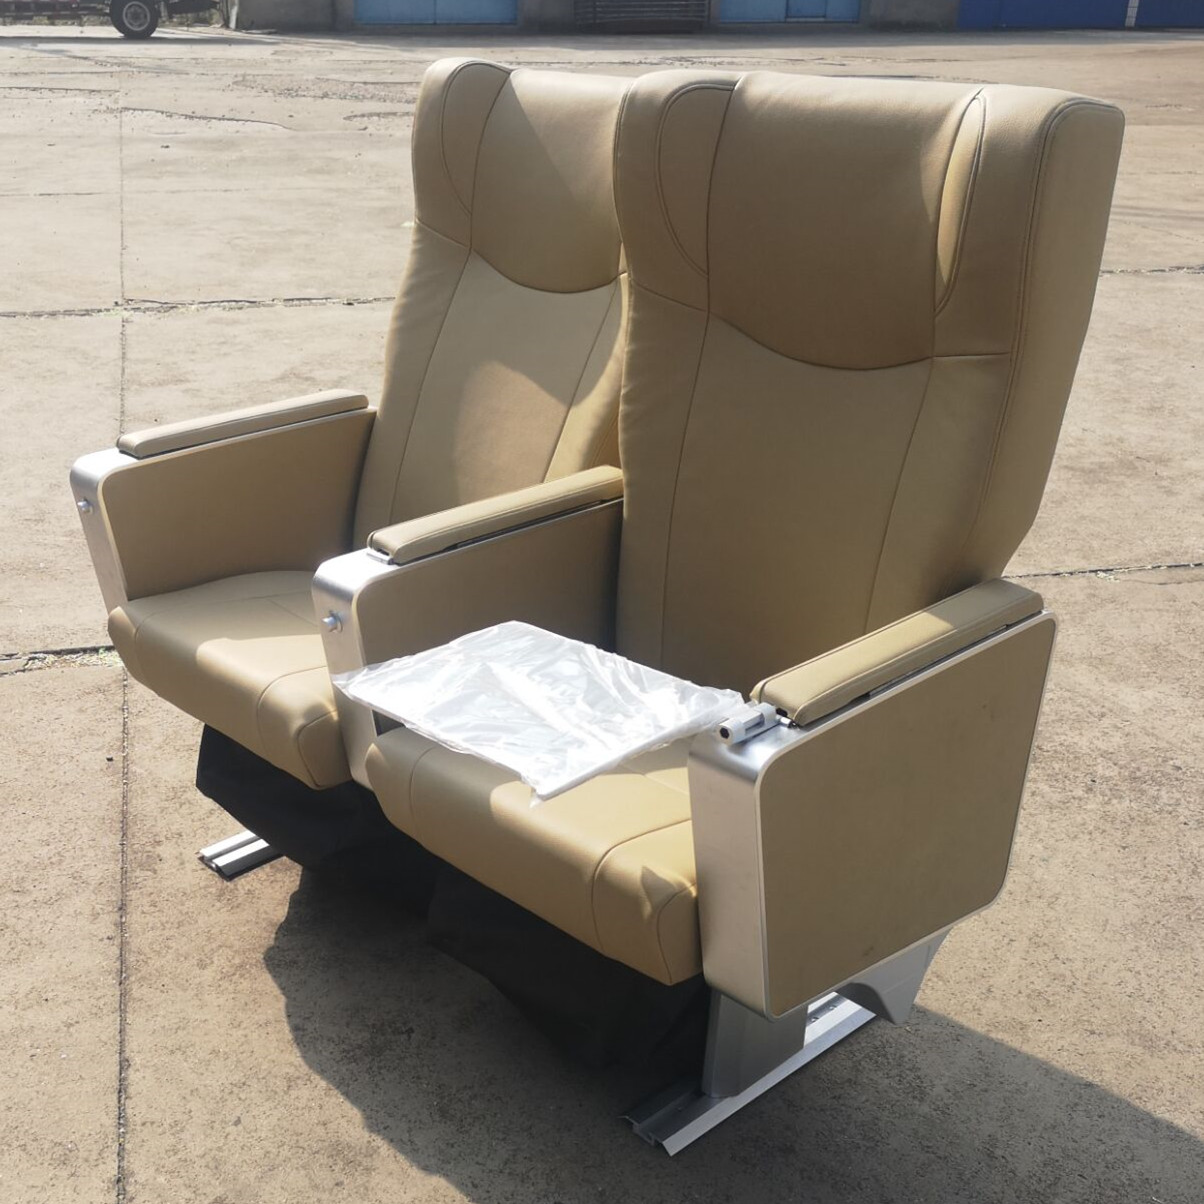 TRA-08 Luxury Ferry Seats